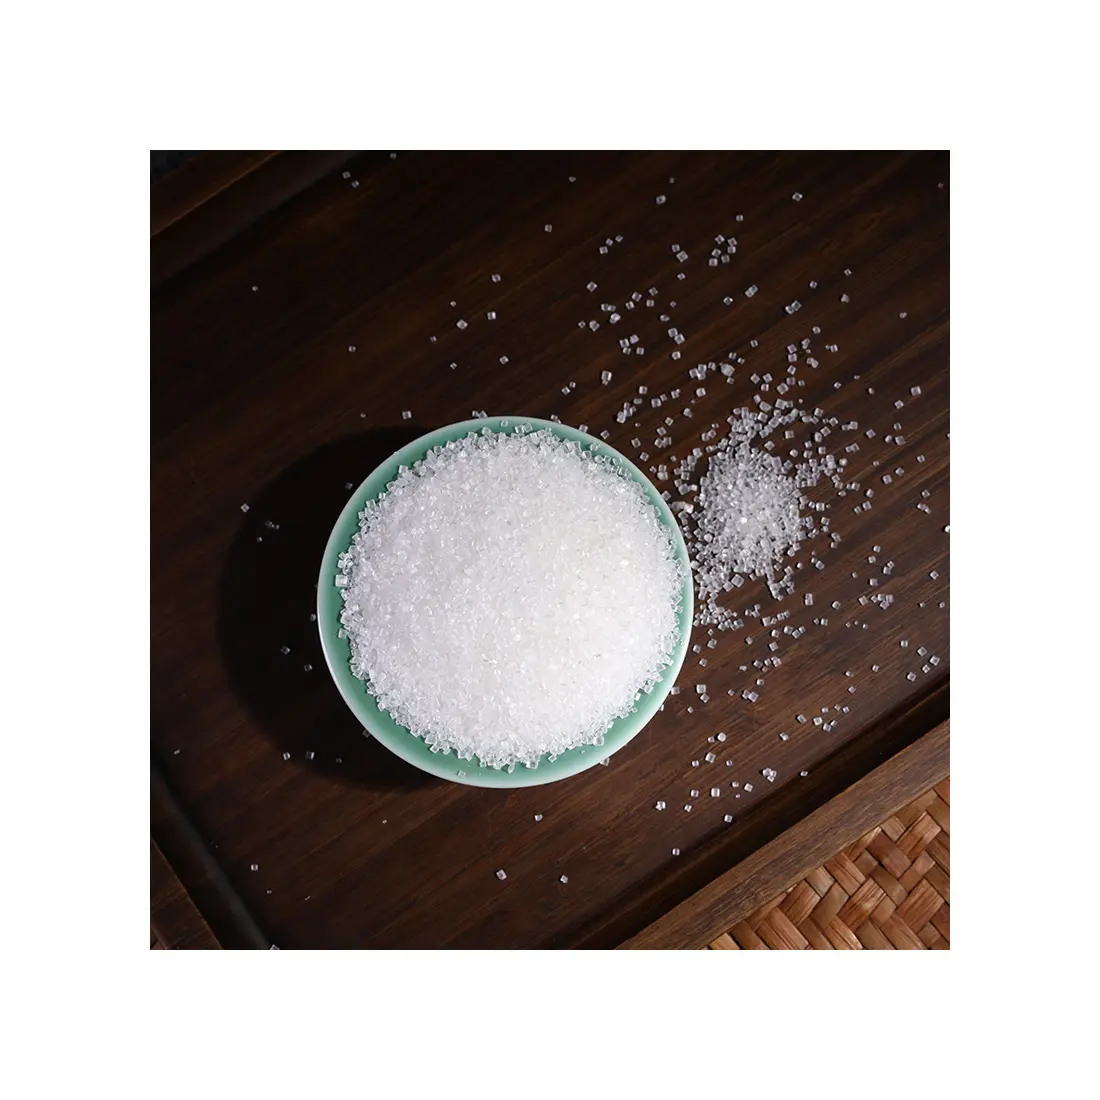 Made in China high-quality white granulated sugar cane sugar made into natural sugar flavor